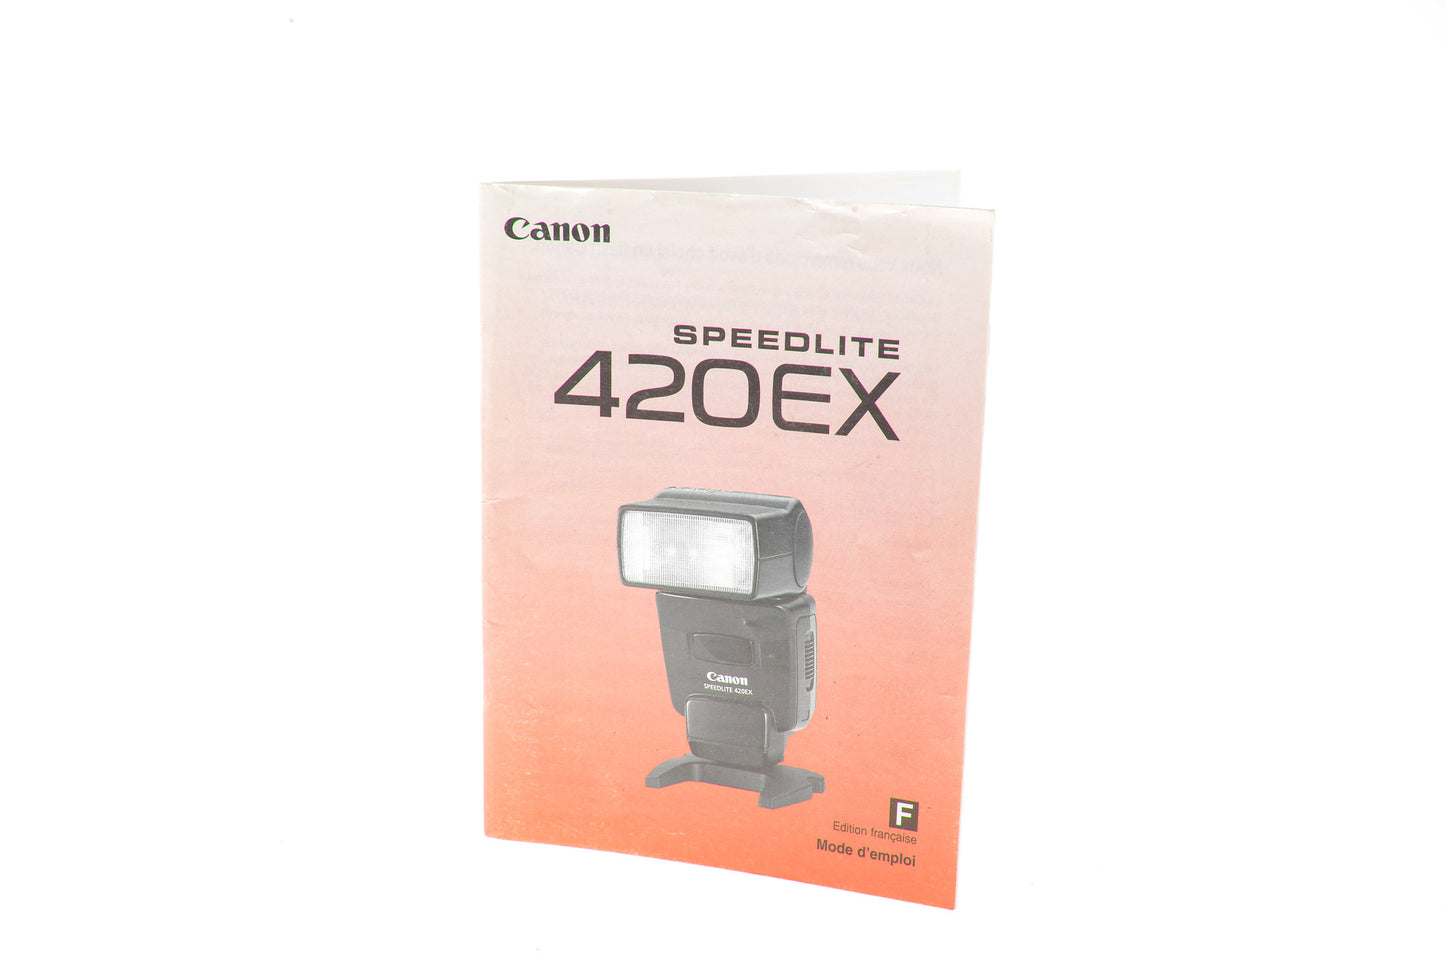 Canon Speedlite 420EX Instruction Manual, French